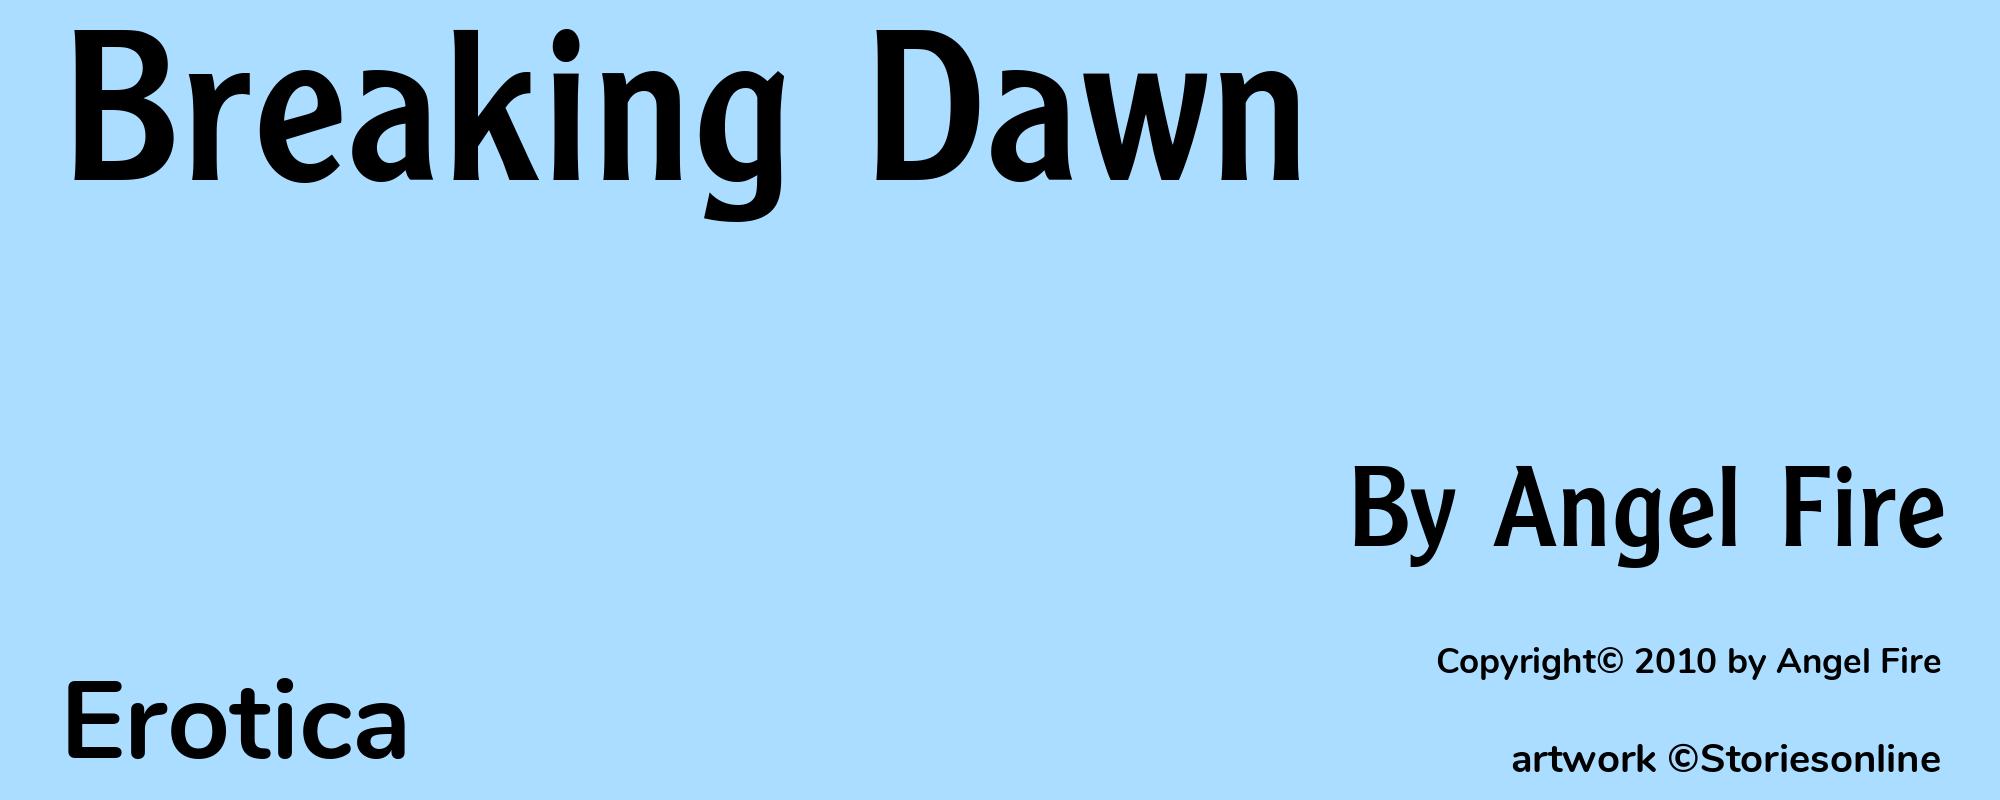 Breaking Dawn - Cover